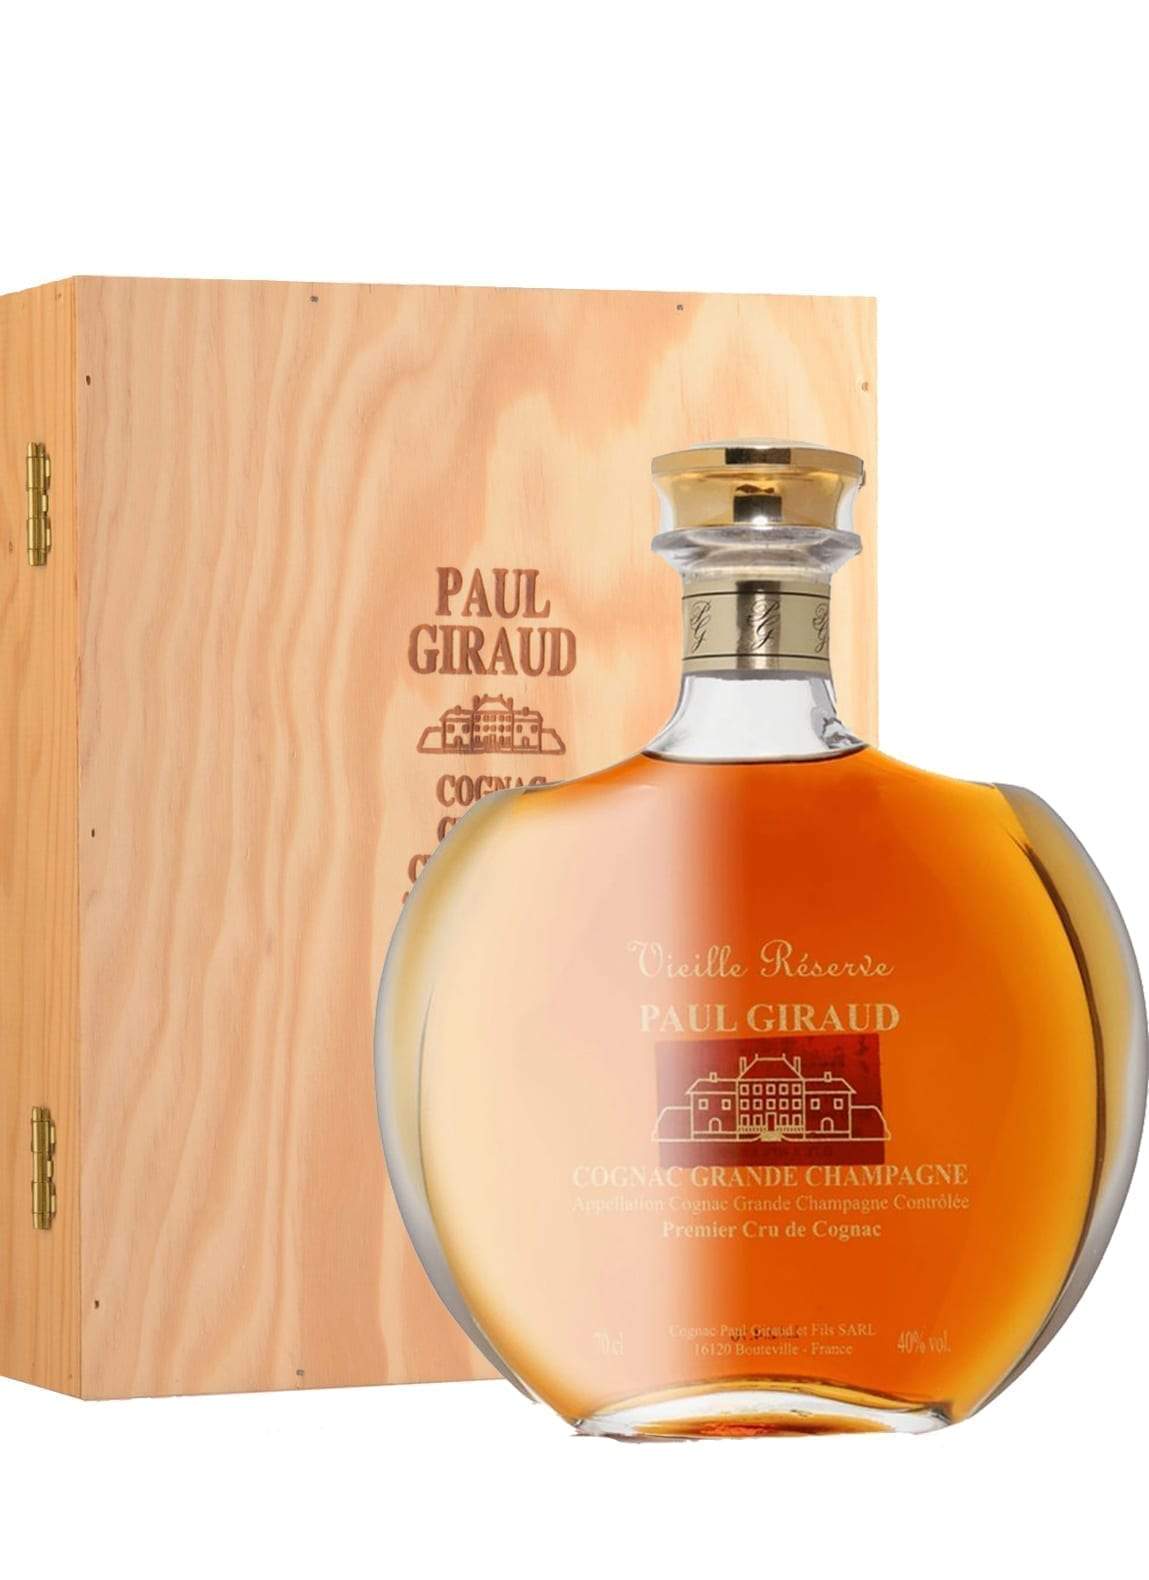 Paul Giraud Cognac Vieille Reserve 25 years 'Heylante Cafafe' Grande Champagne 40% 700ml | Brandy | Shop online at Spirits of France